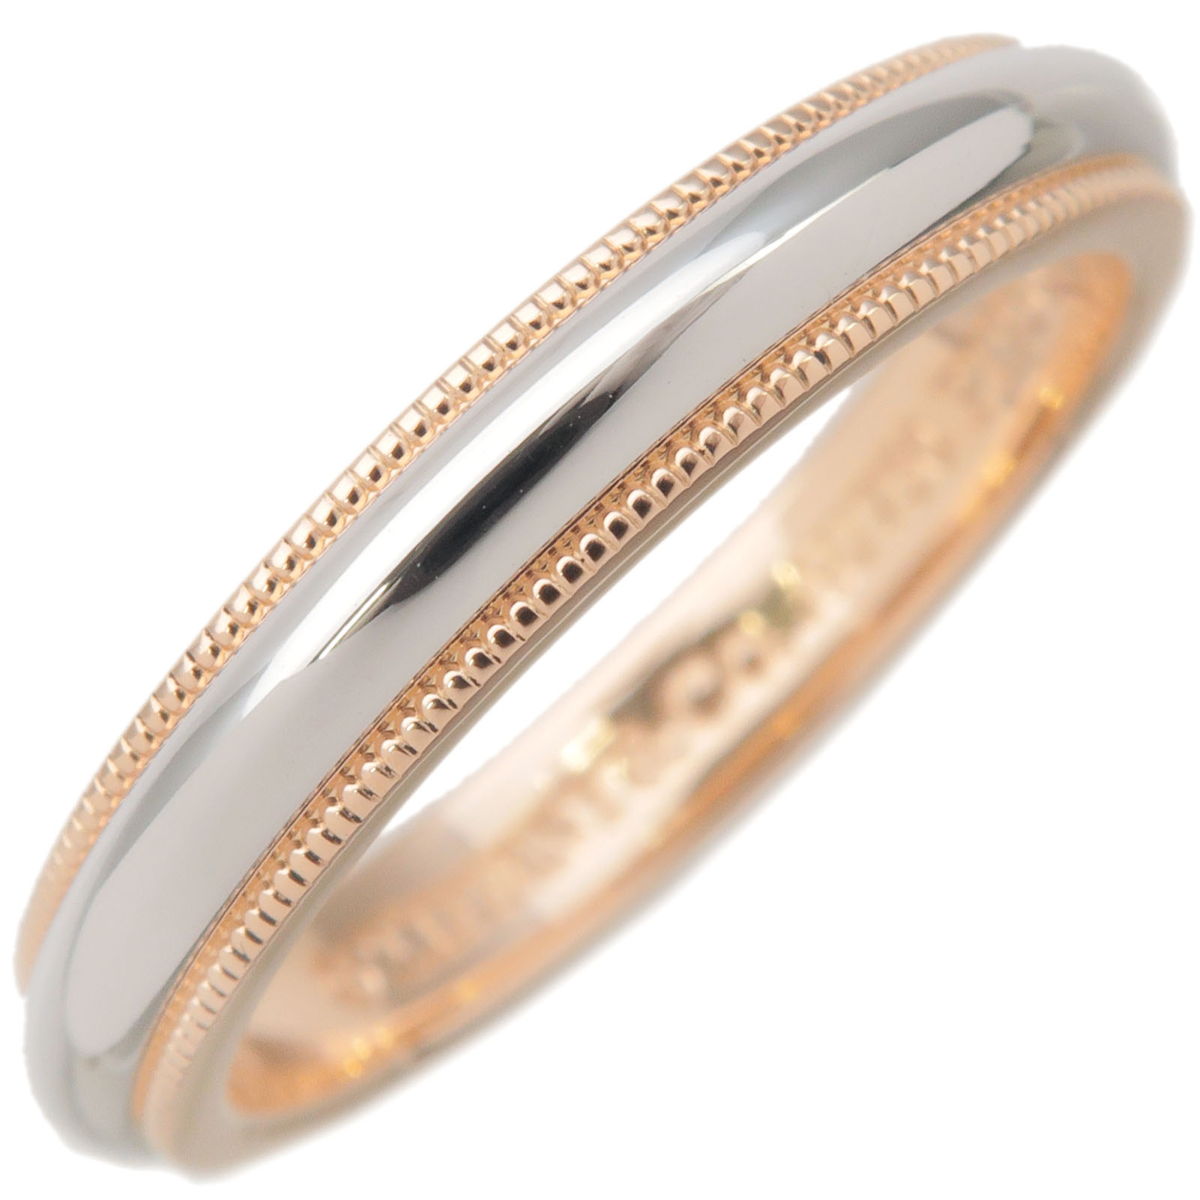 Tiffany&Co.-Milgrain-Band-Ring-PT950-750PG-US7.5-HK16.5-EU56